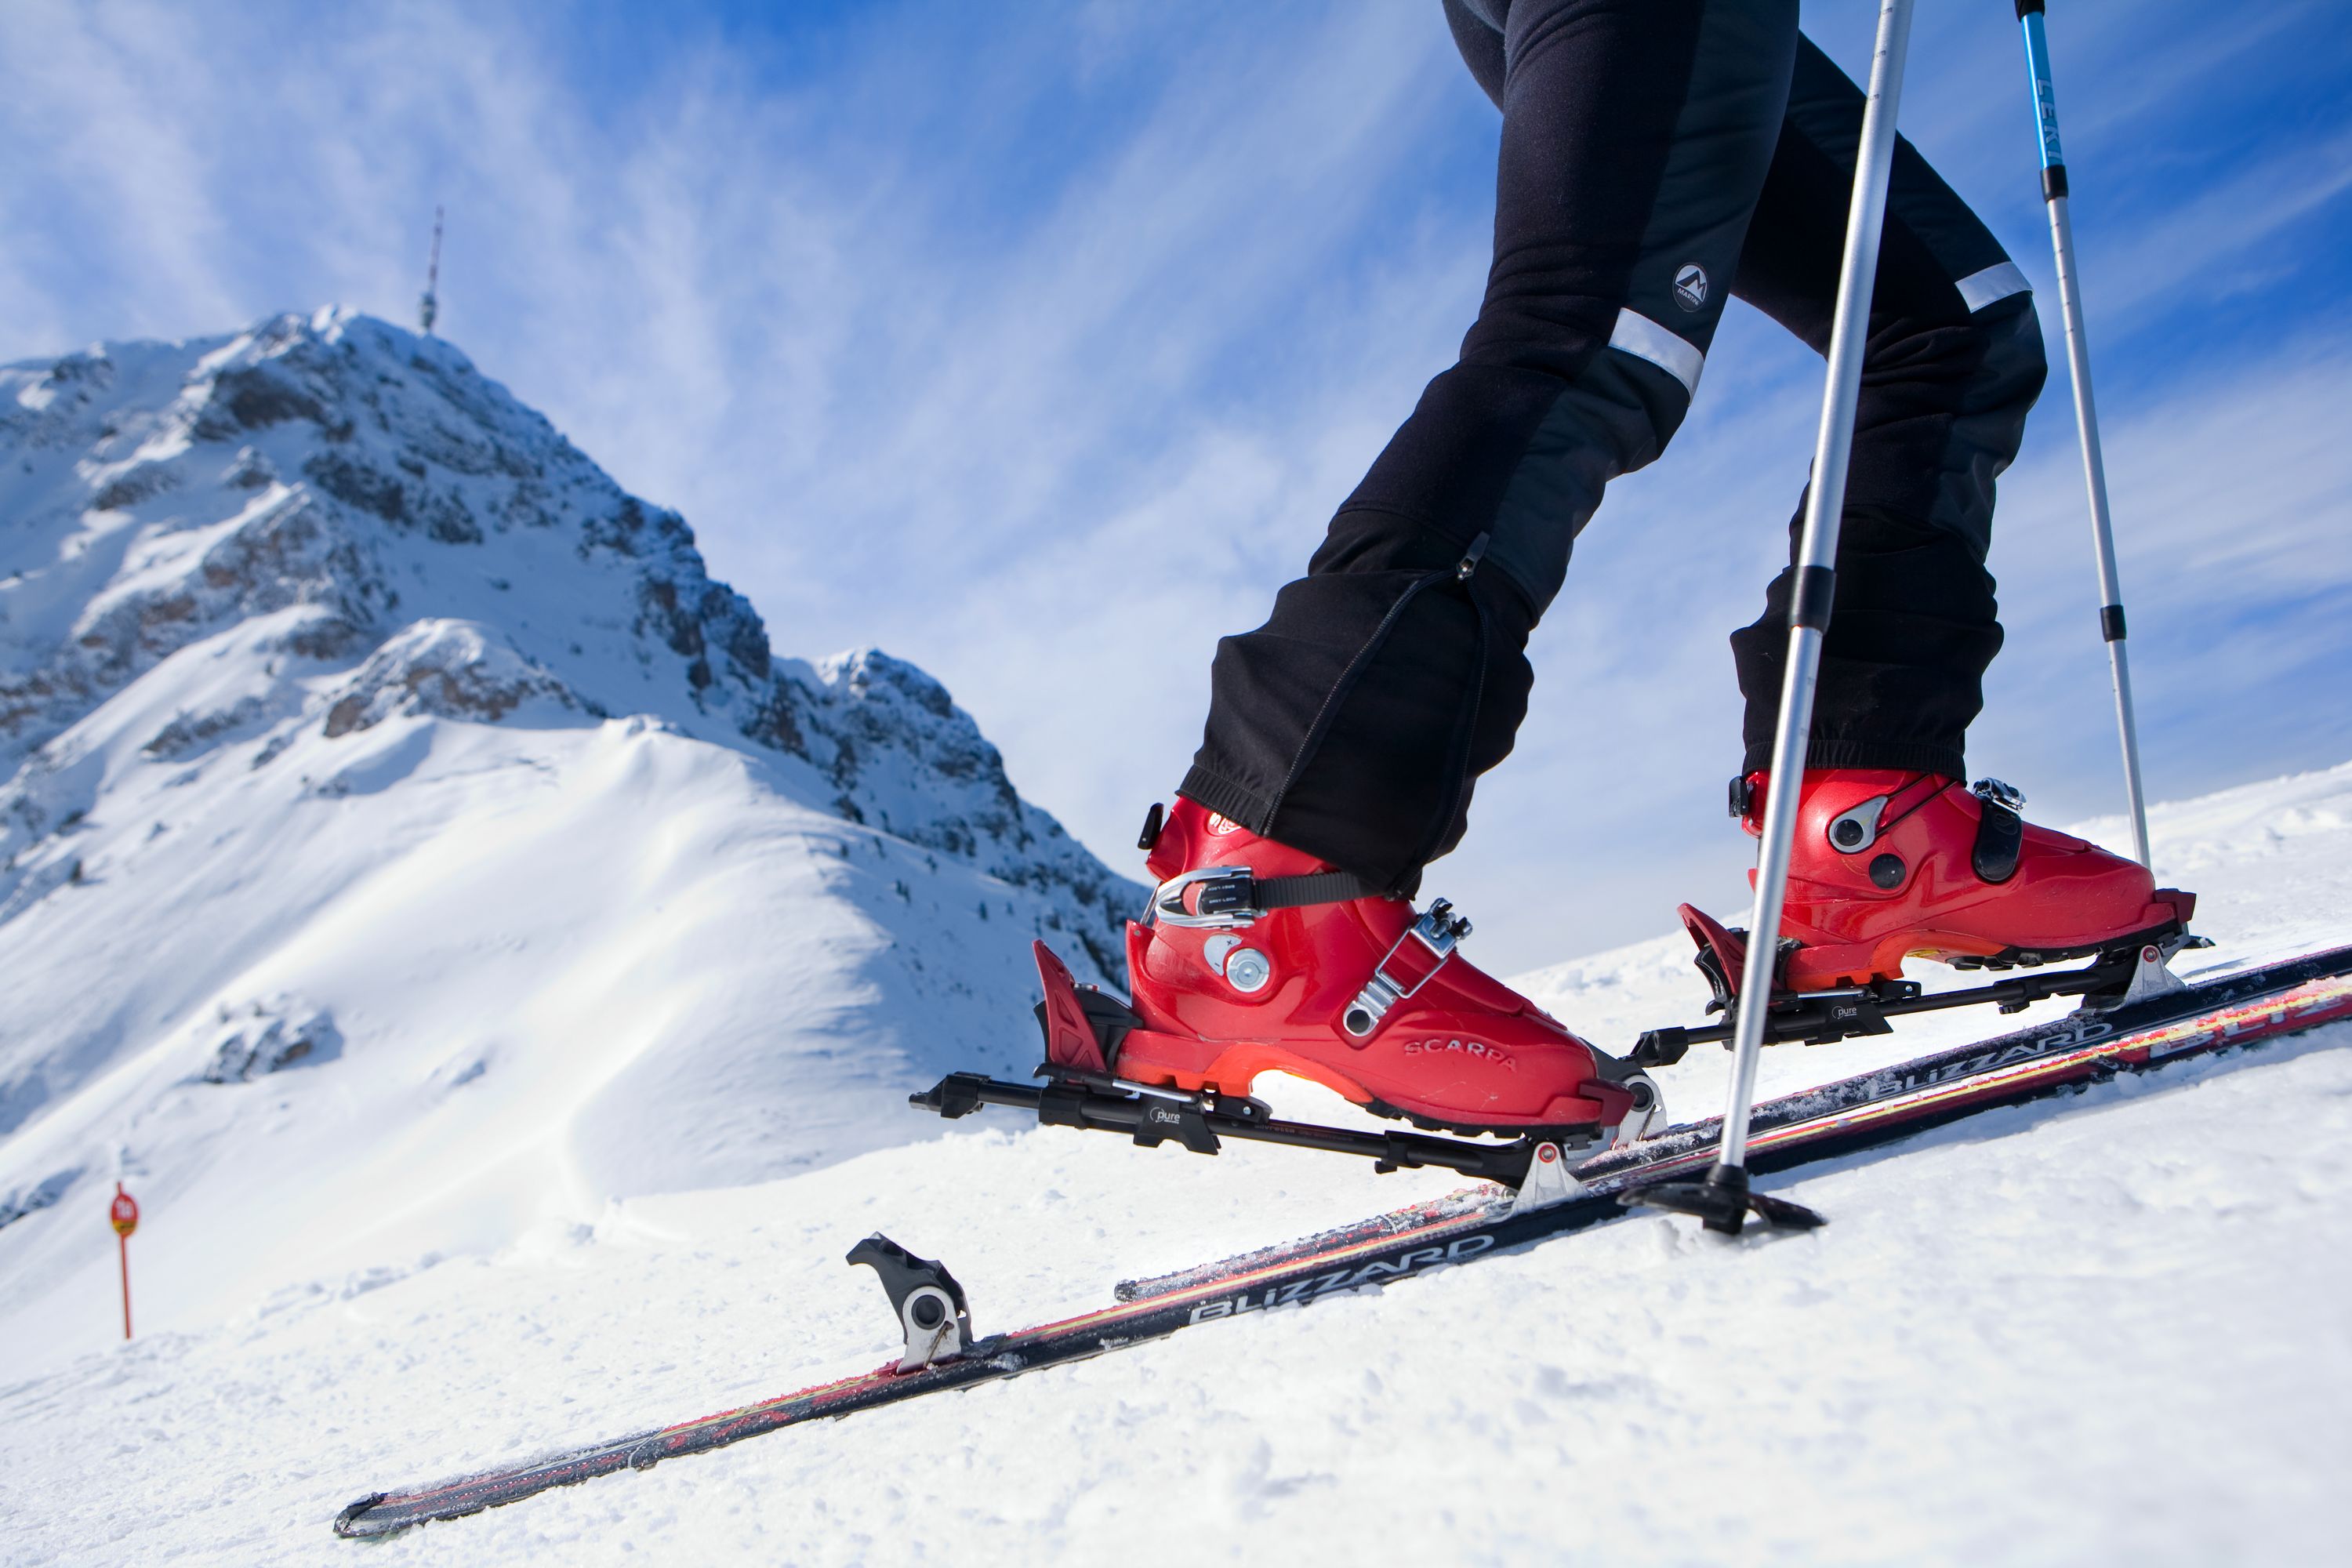 Ski tv. Ски туринг. Скитур лыжи. Лыжи для ски альпинизма. Горные лыжи для скитура.